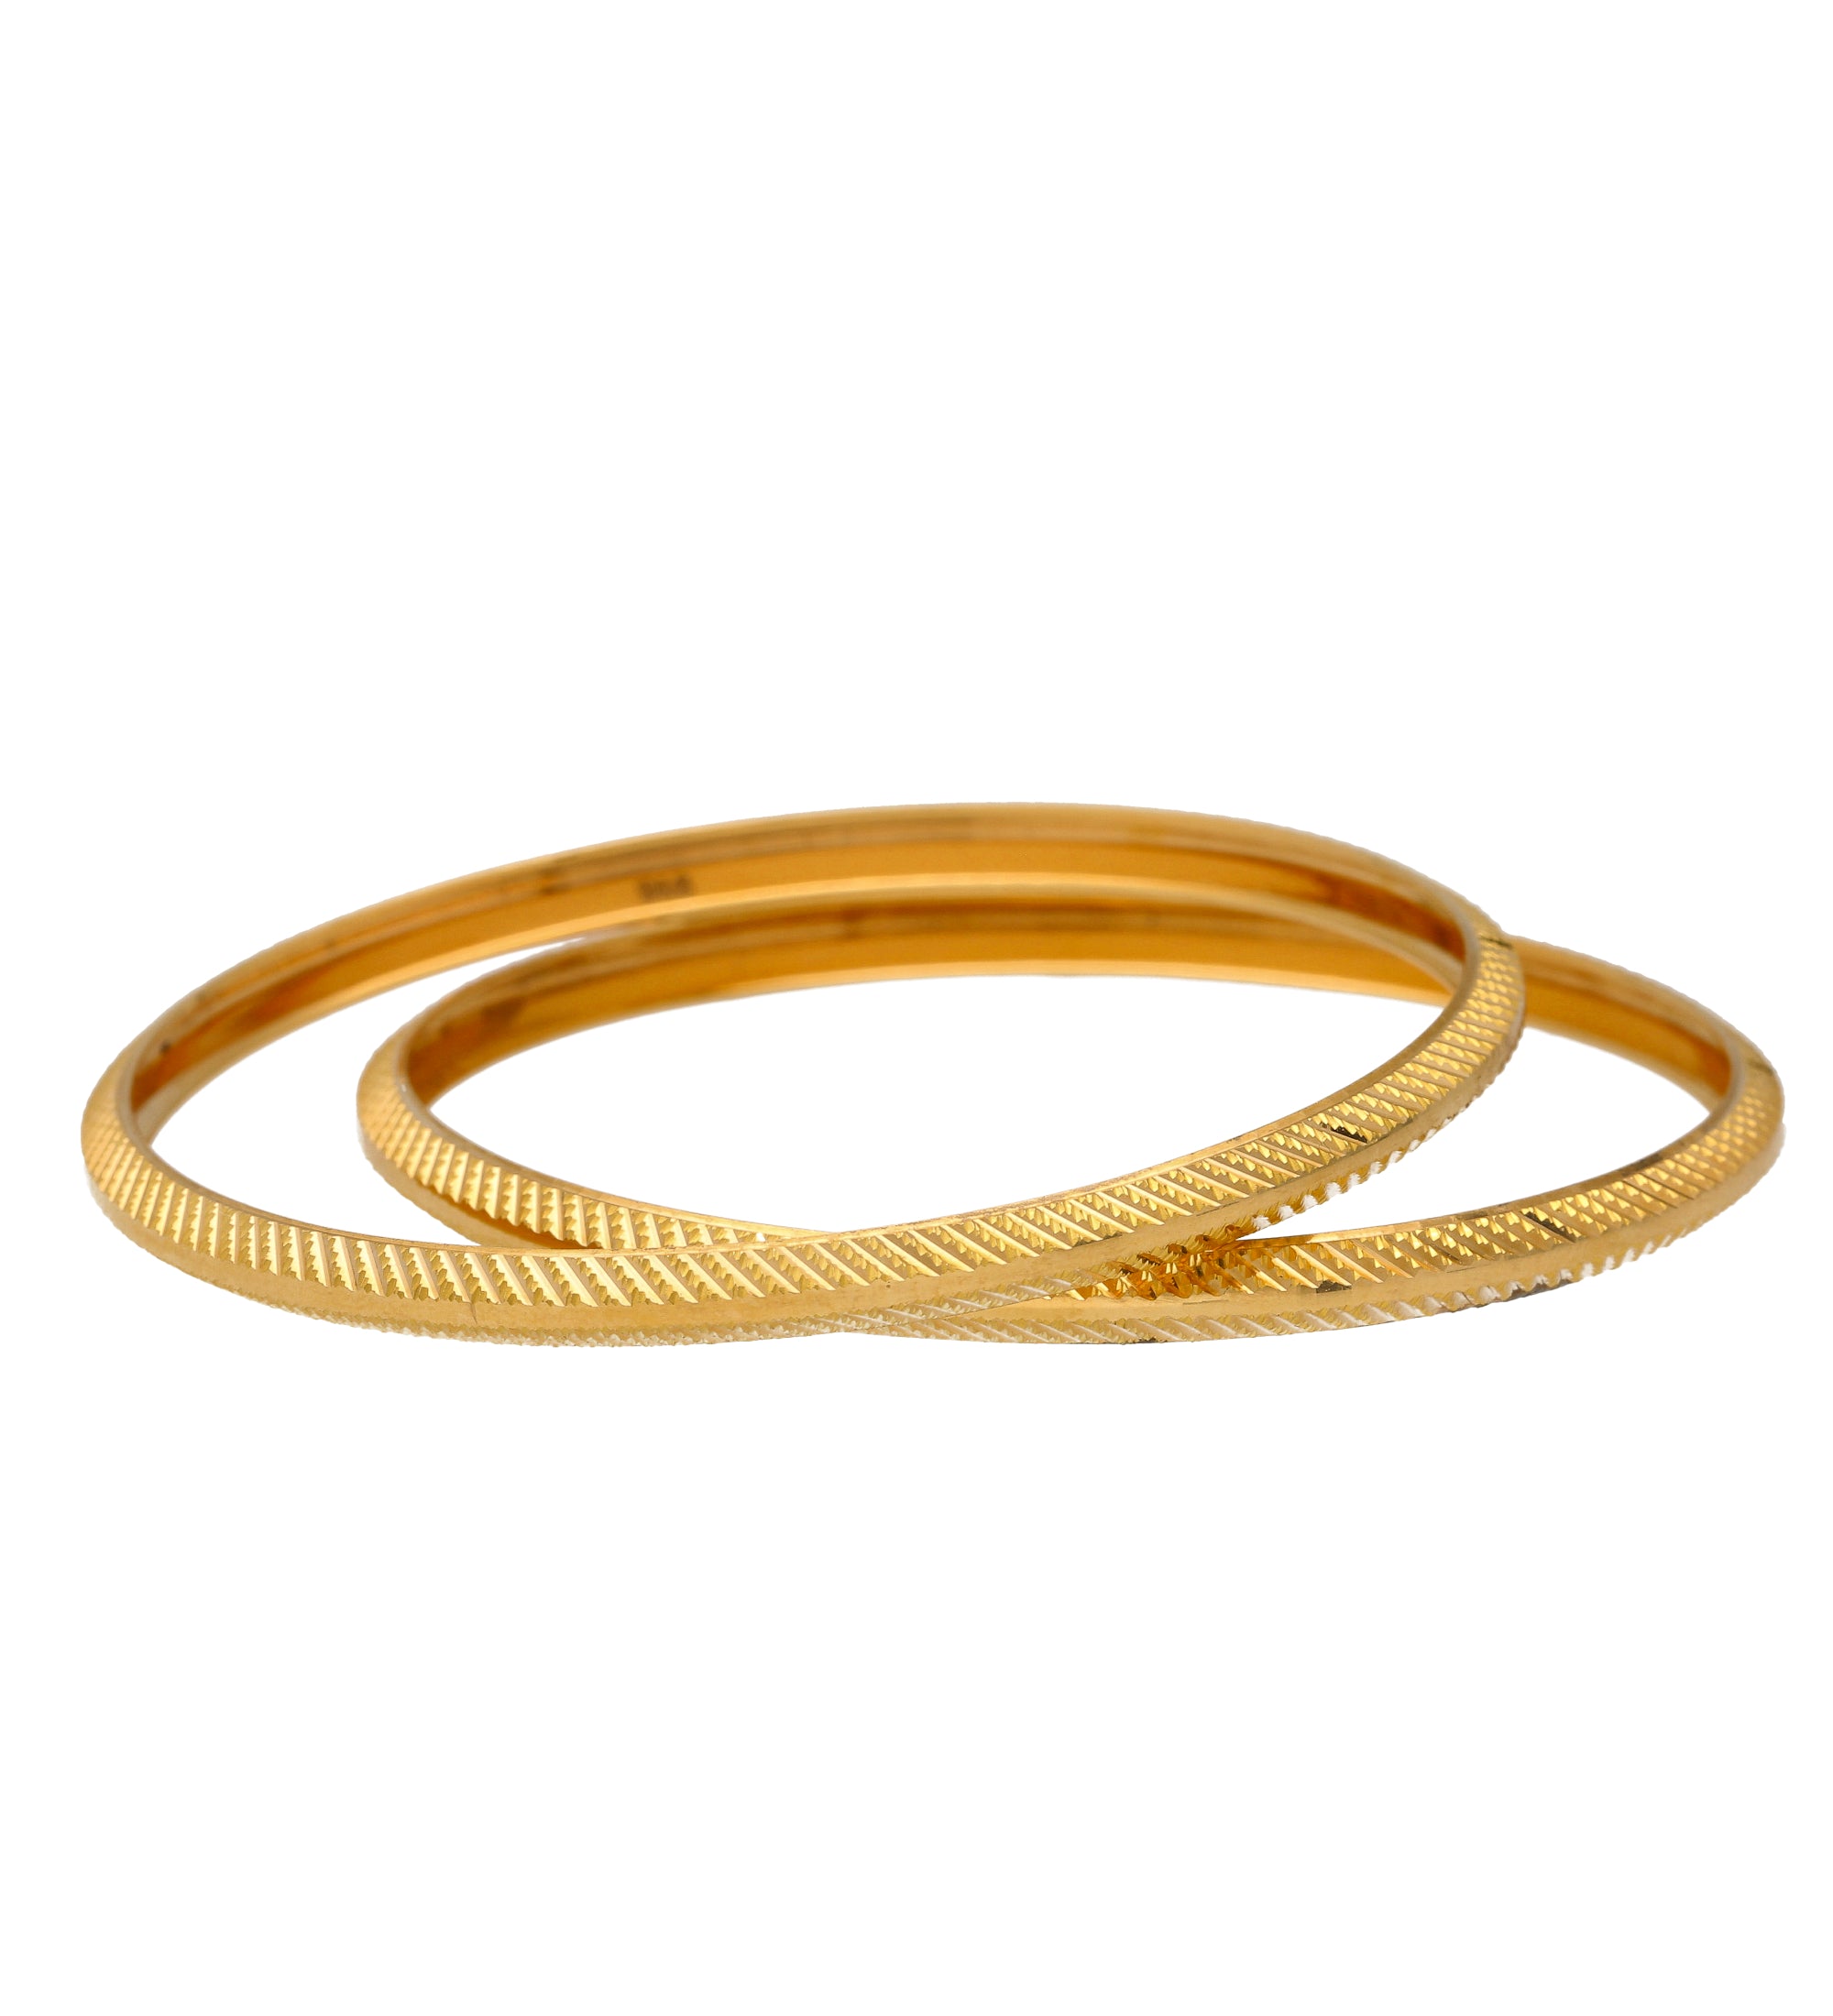 Buy ZIVOM® Stainless Steel Matt Gold Plated Free Size Kada Bracelet For Men  at Amazon.in